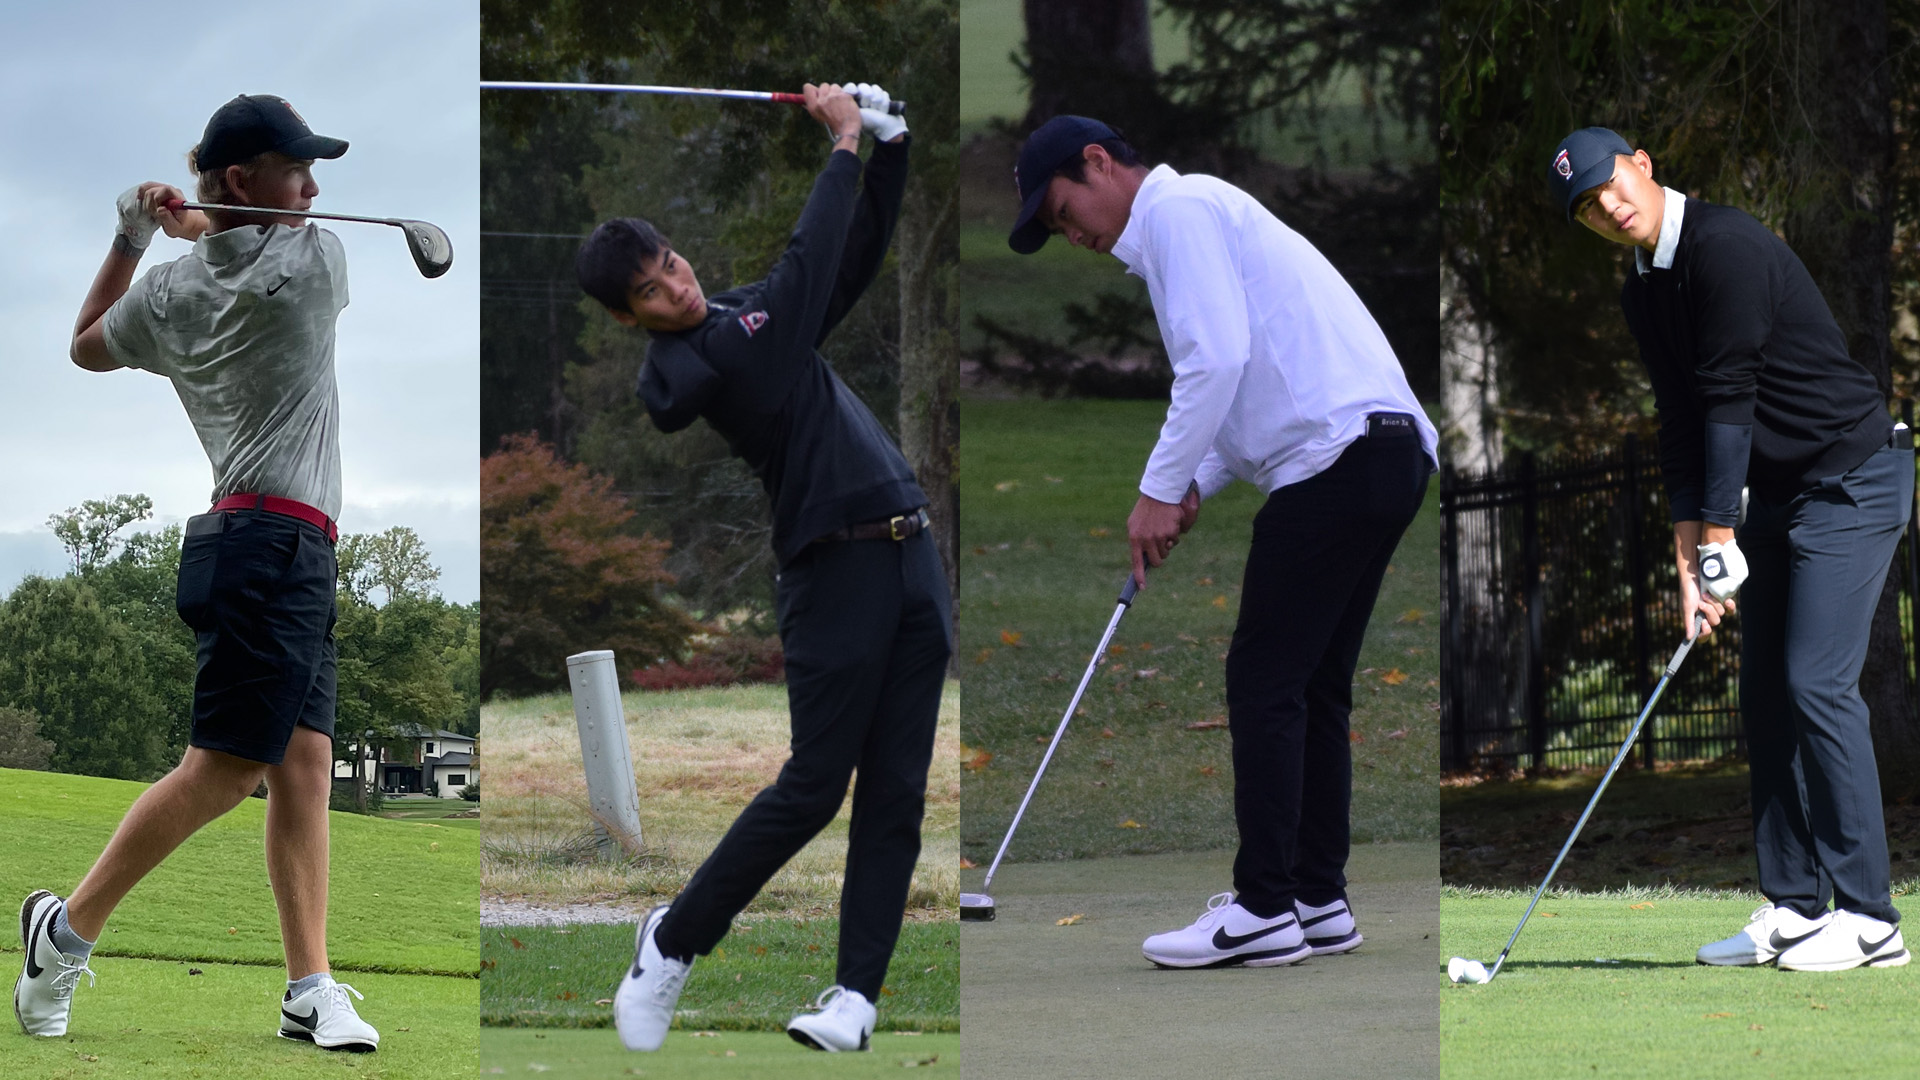 four action photos of men's golfers